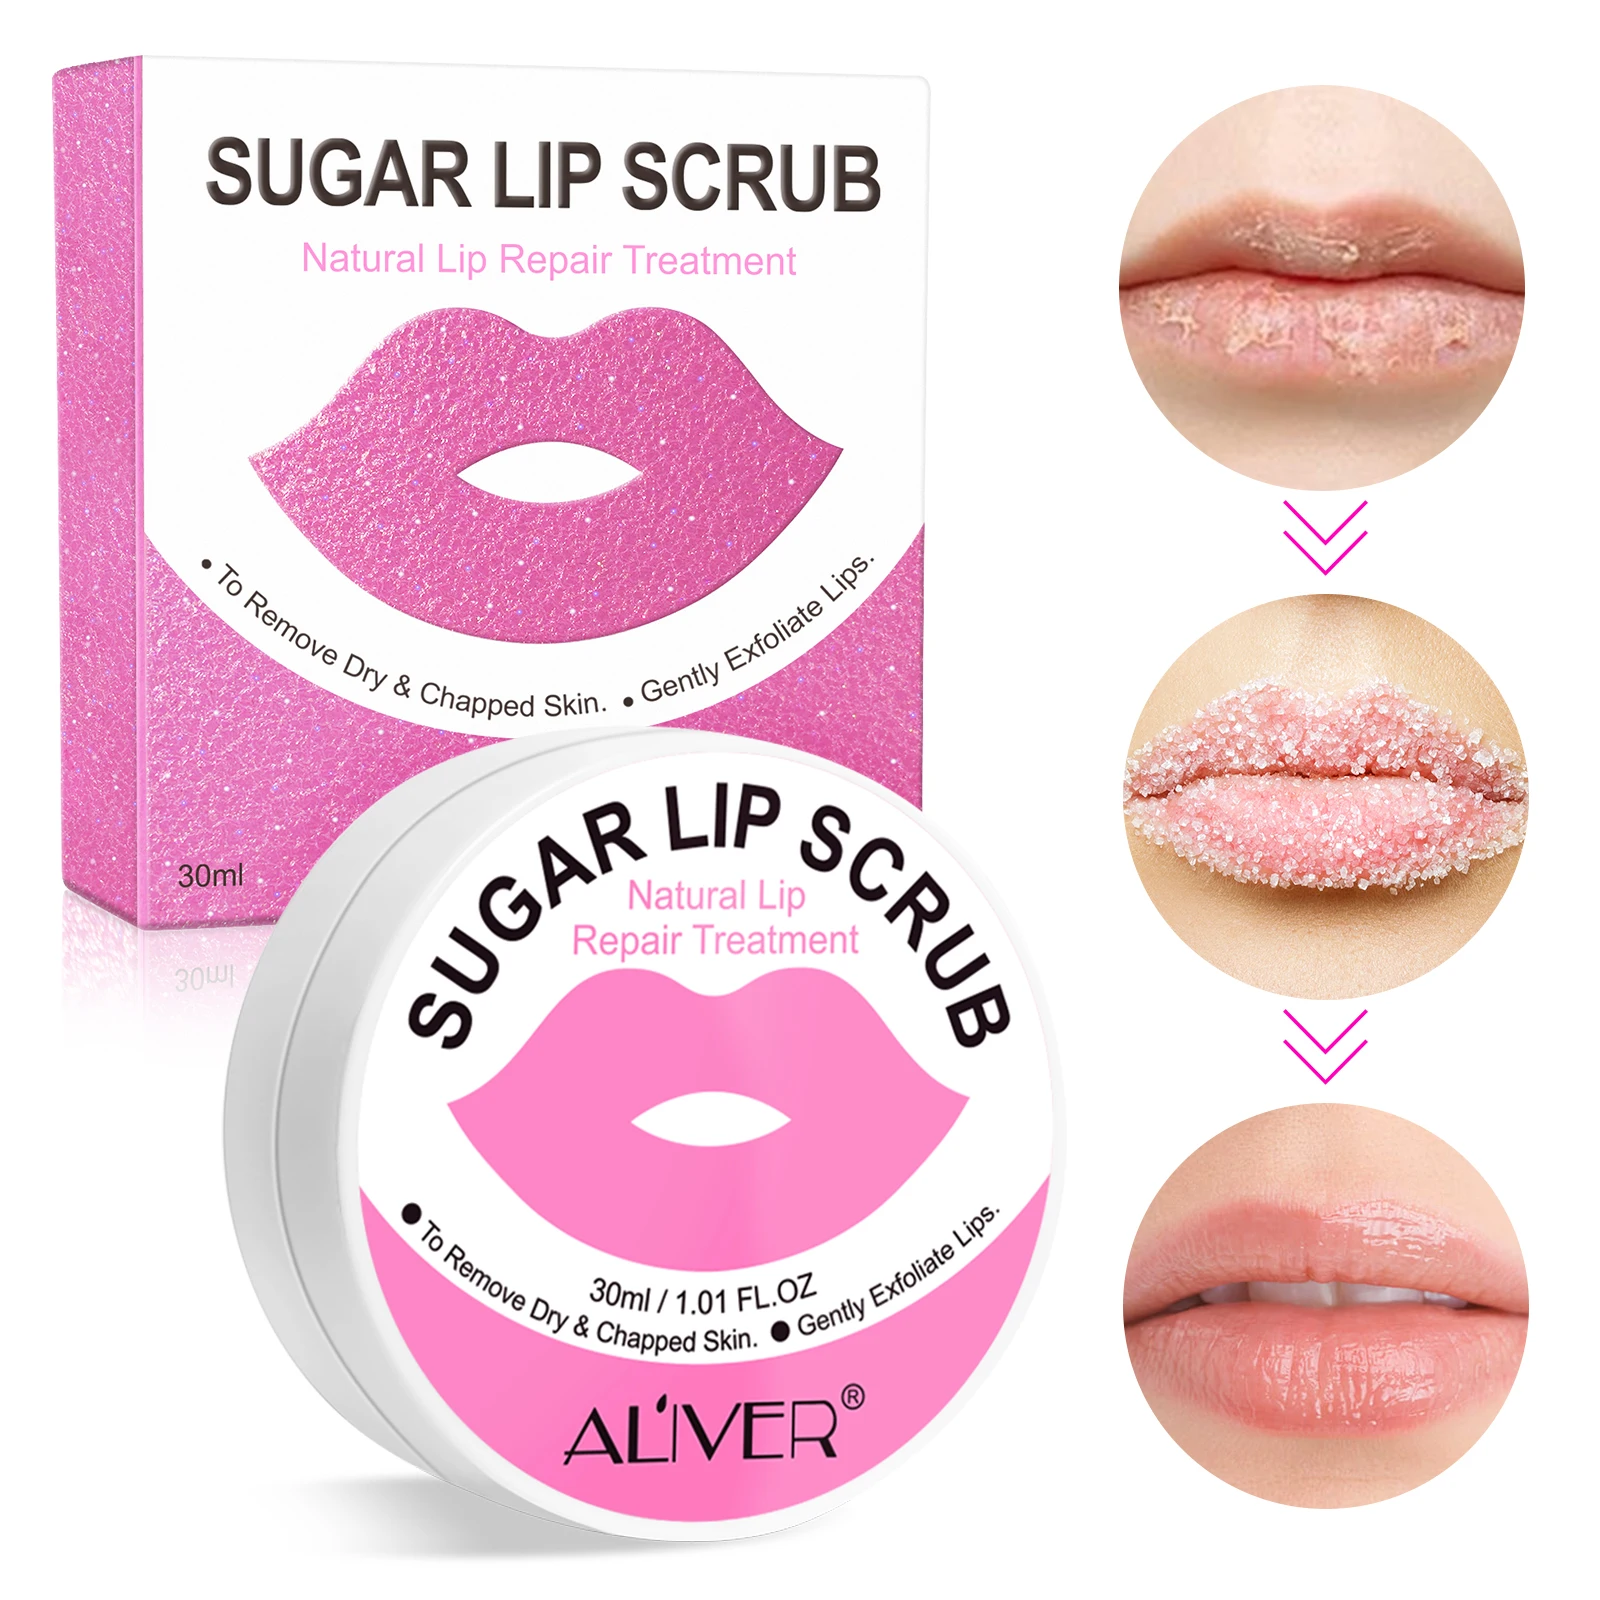 

ALIVER Natural Lip Repair Treatment Exfoliate Moisturize Soften Lips Private Label Sugar Organic Lip Scrub